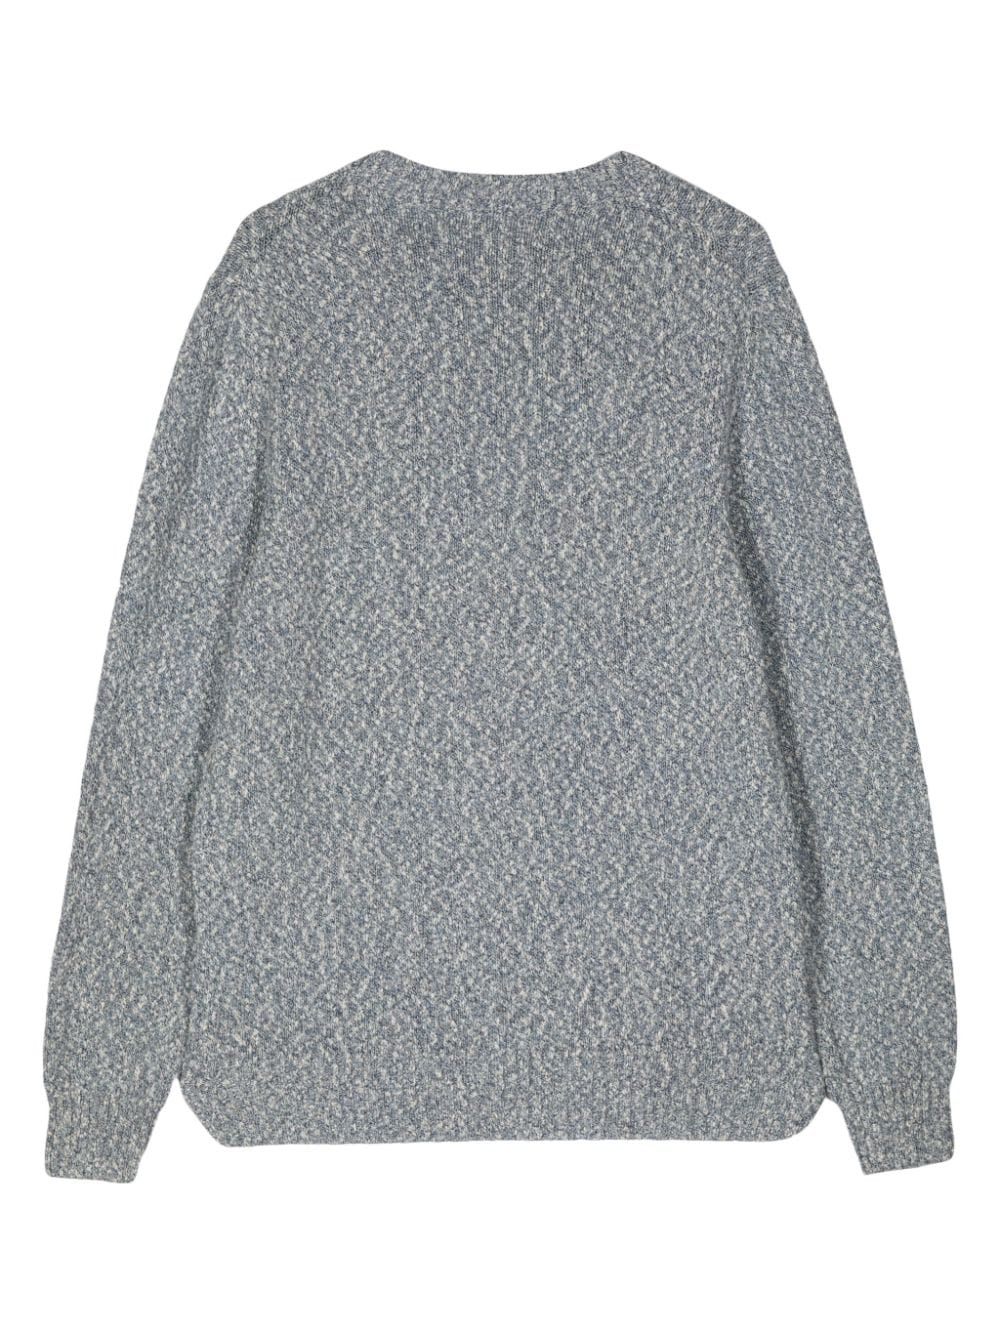 Cruciani knitted cotton jumper - Blauw